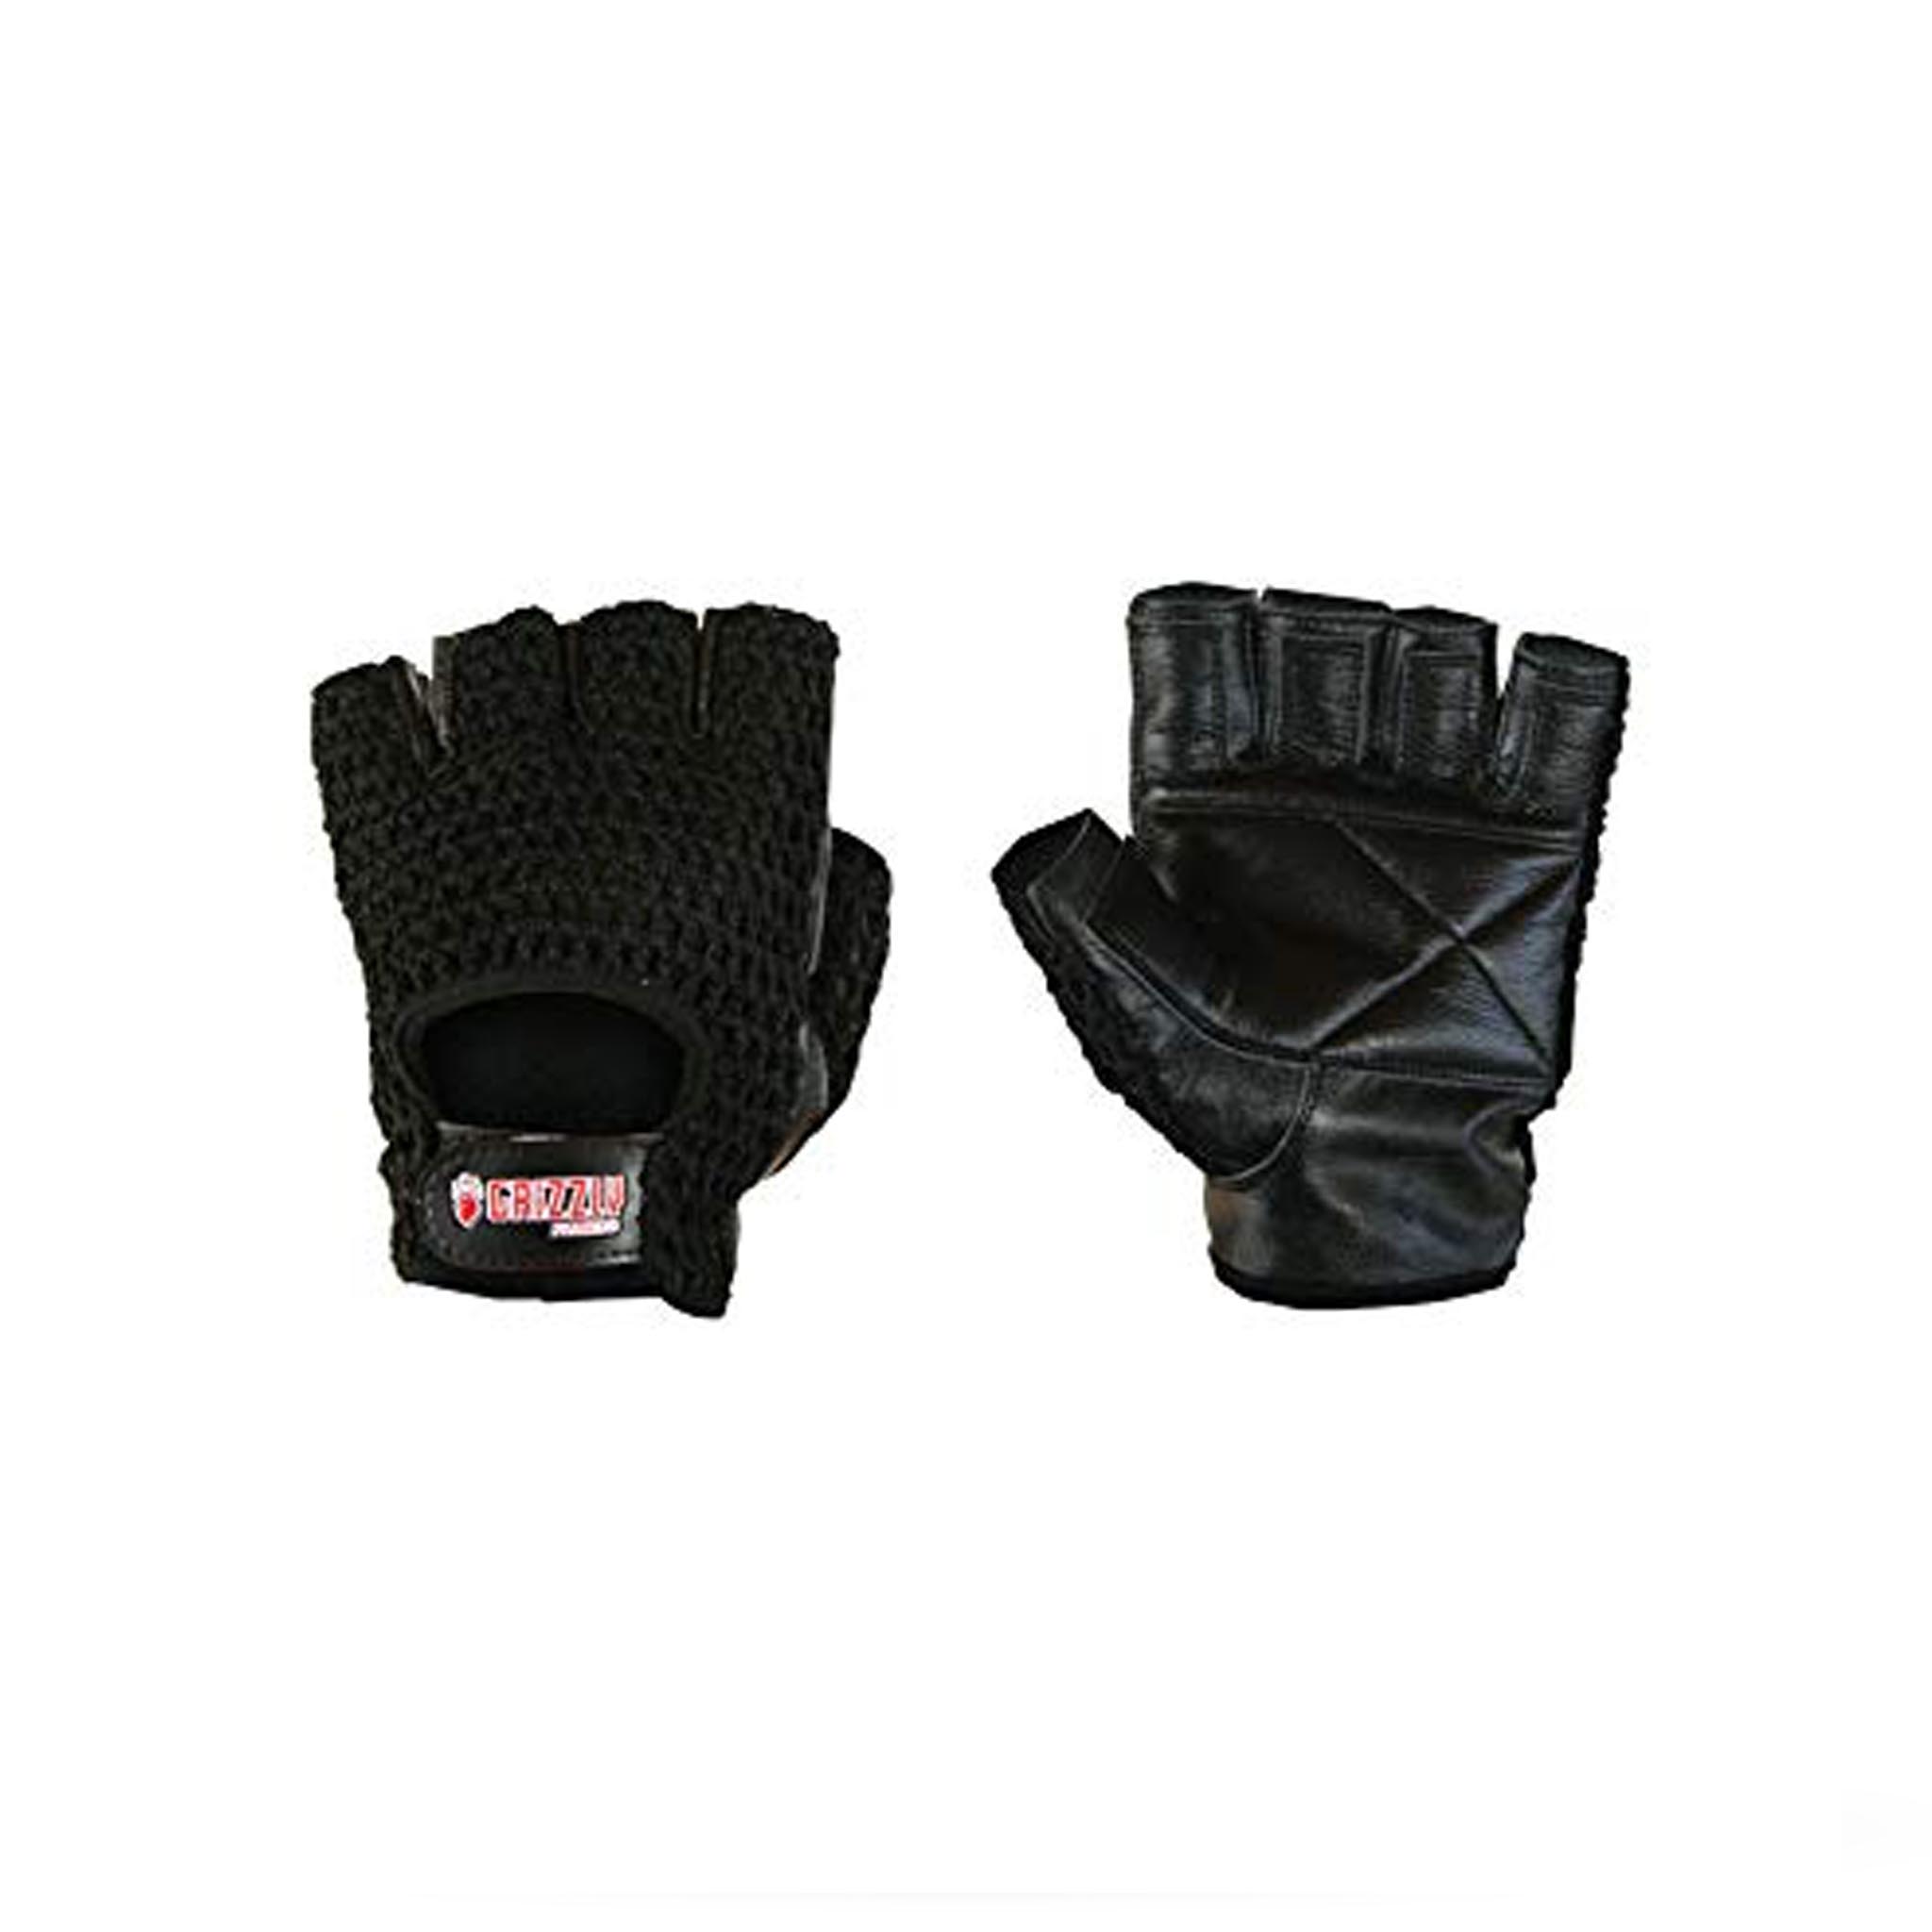 Bear Paws Training Gloves 8733-04 Black